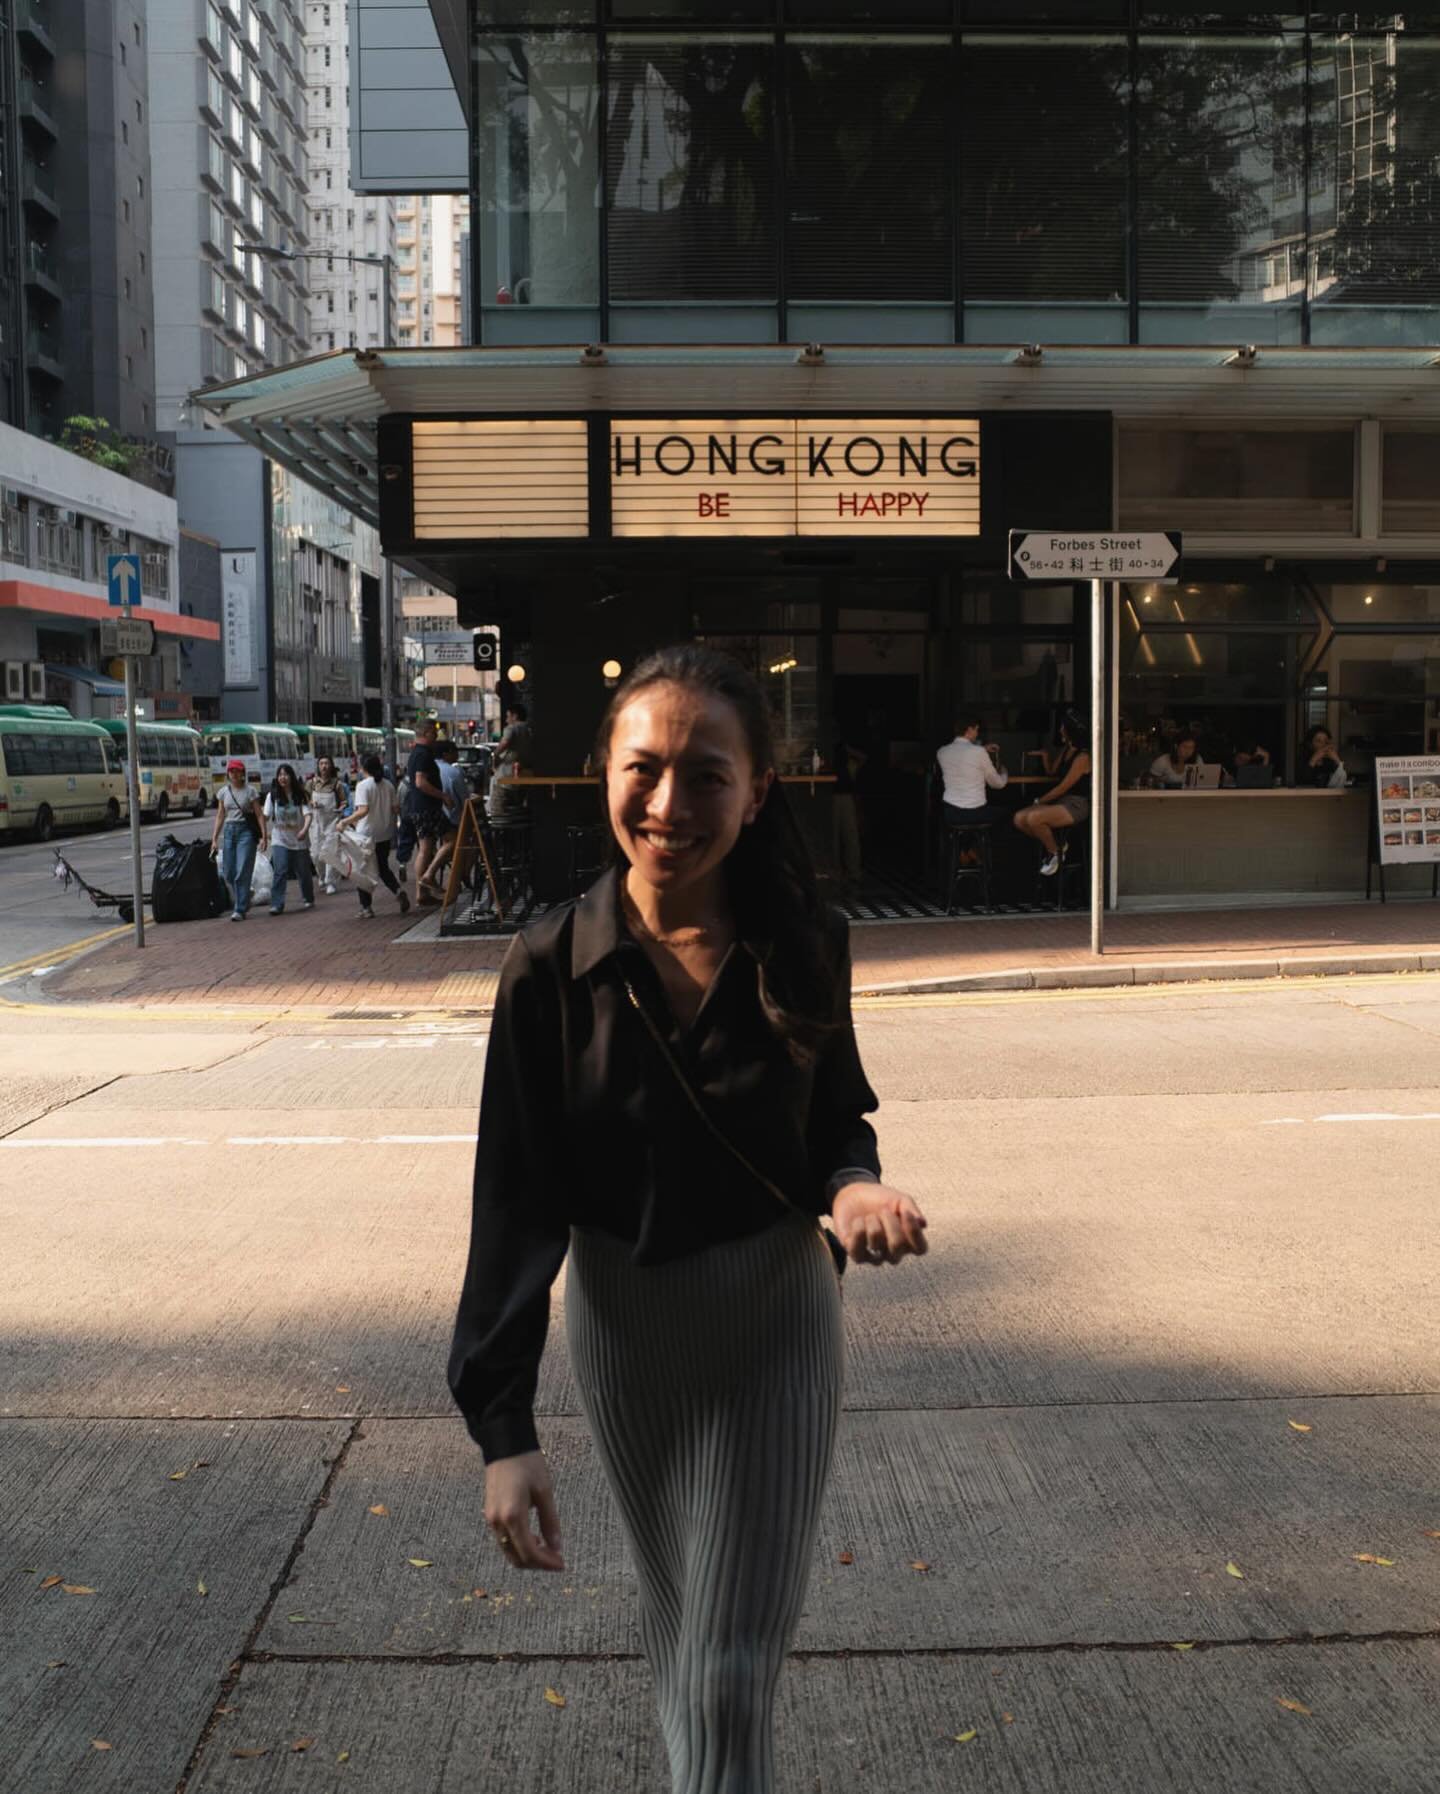 72 hours in Hong Kong 🇭🇰✨🤍

#hongkong #lovethiscity 
.
.
.
.
.
#discoverhongkong #awesomehongkong #timeouthk&nbsp;#discoverhongkong&nbsp;#explorehongkong&nbsp;#hk&nbsp;#hkig&nbsp;#instahk&nbsp;#amazinghongkong&nbsp;#unlimitedhongkong&nbsp;#ilovehk